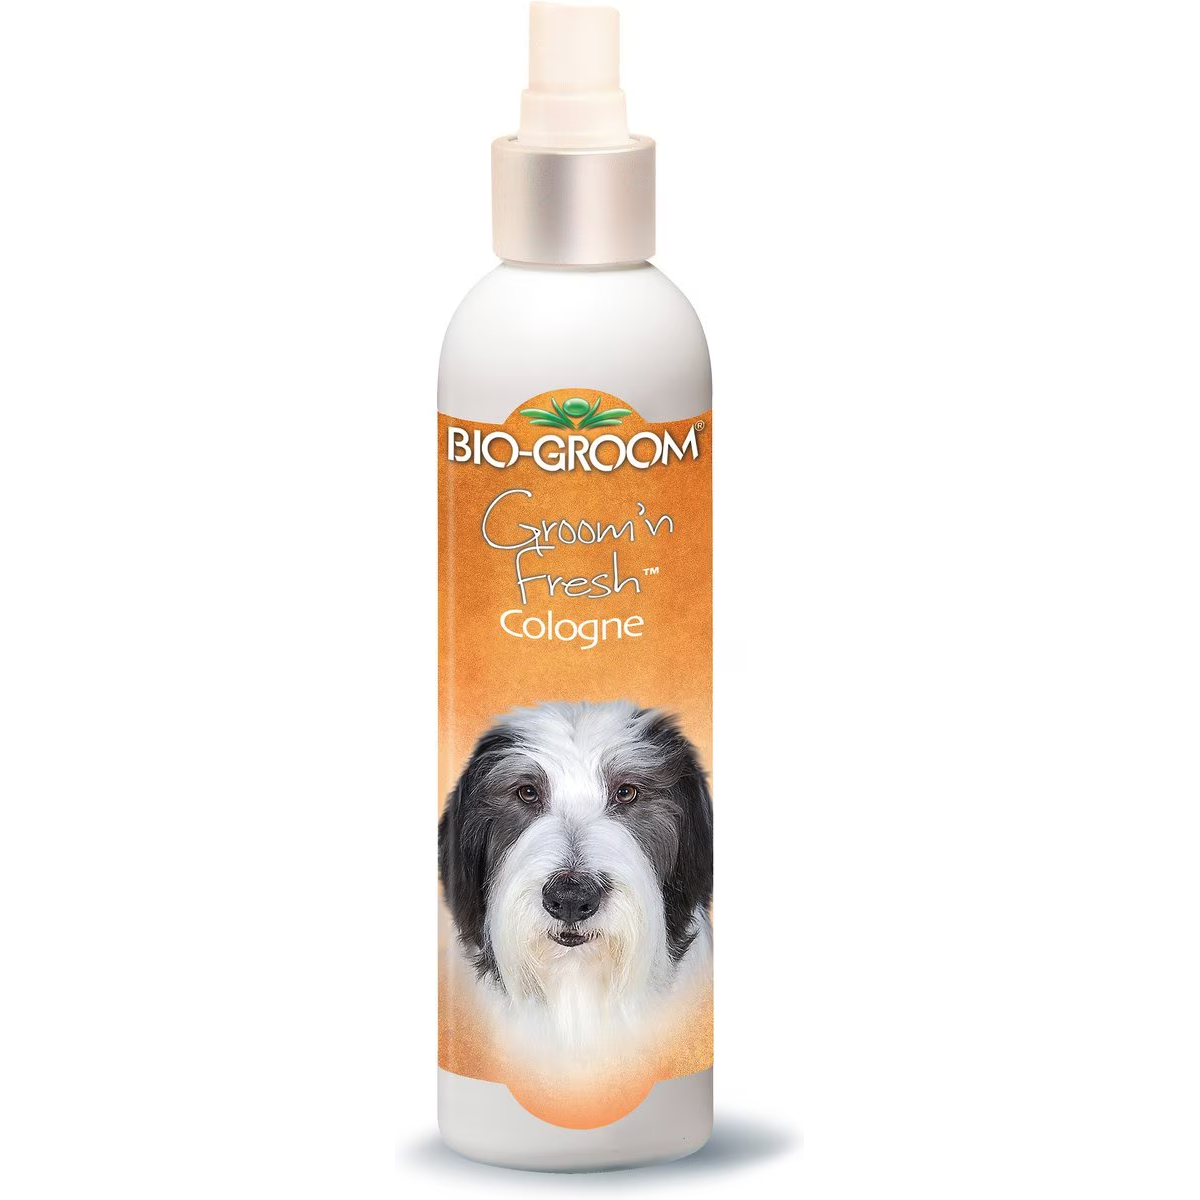 Bio-Groom Groom 'N Fresh Cologne Dog Spray